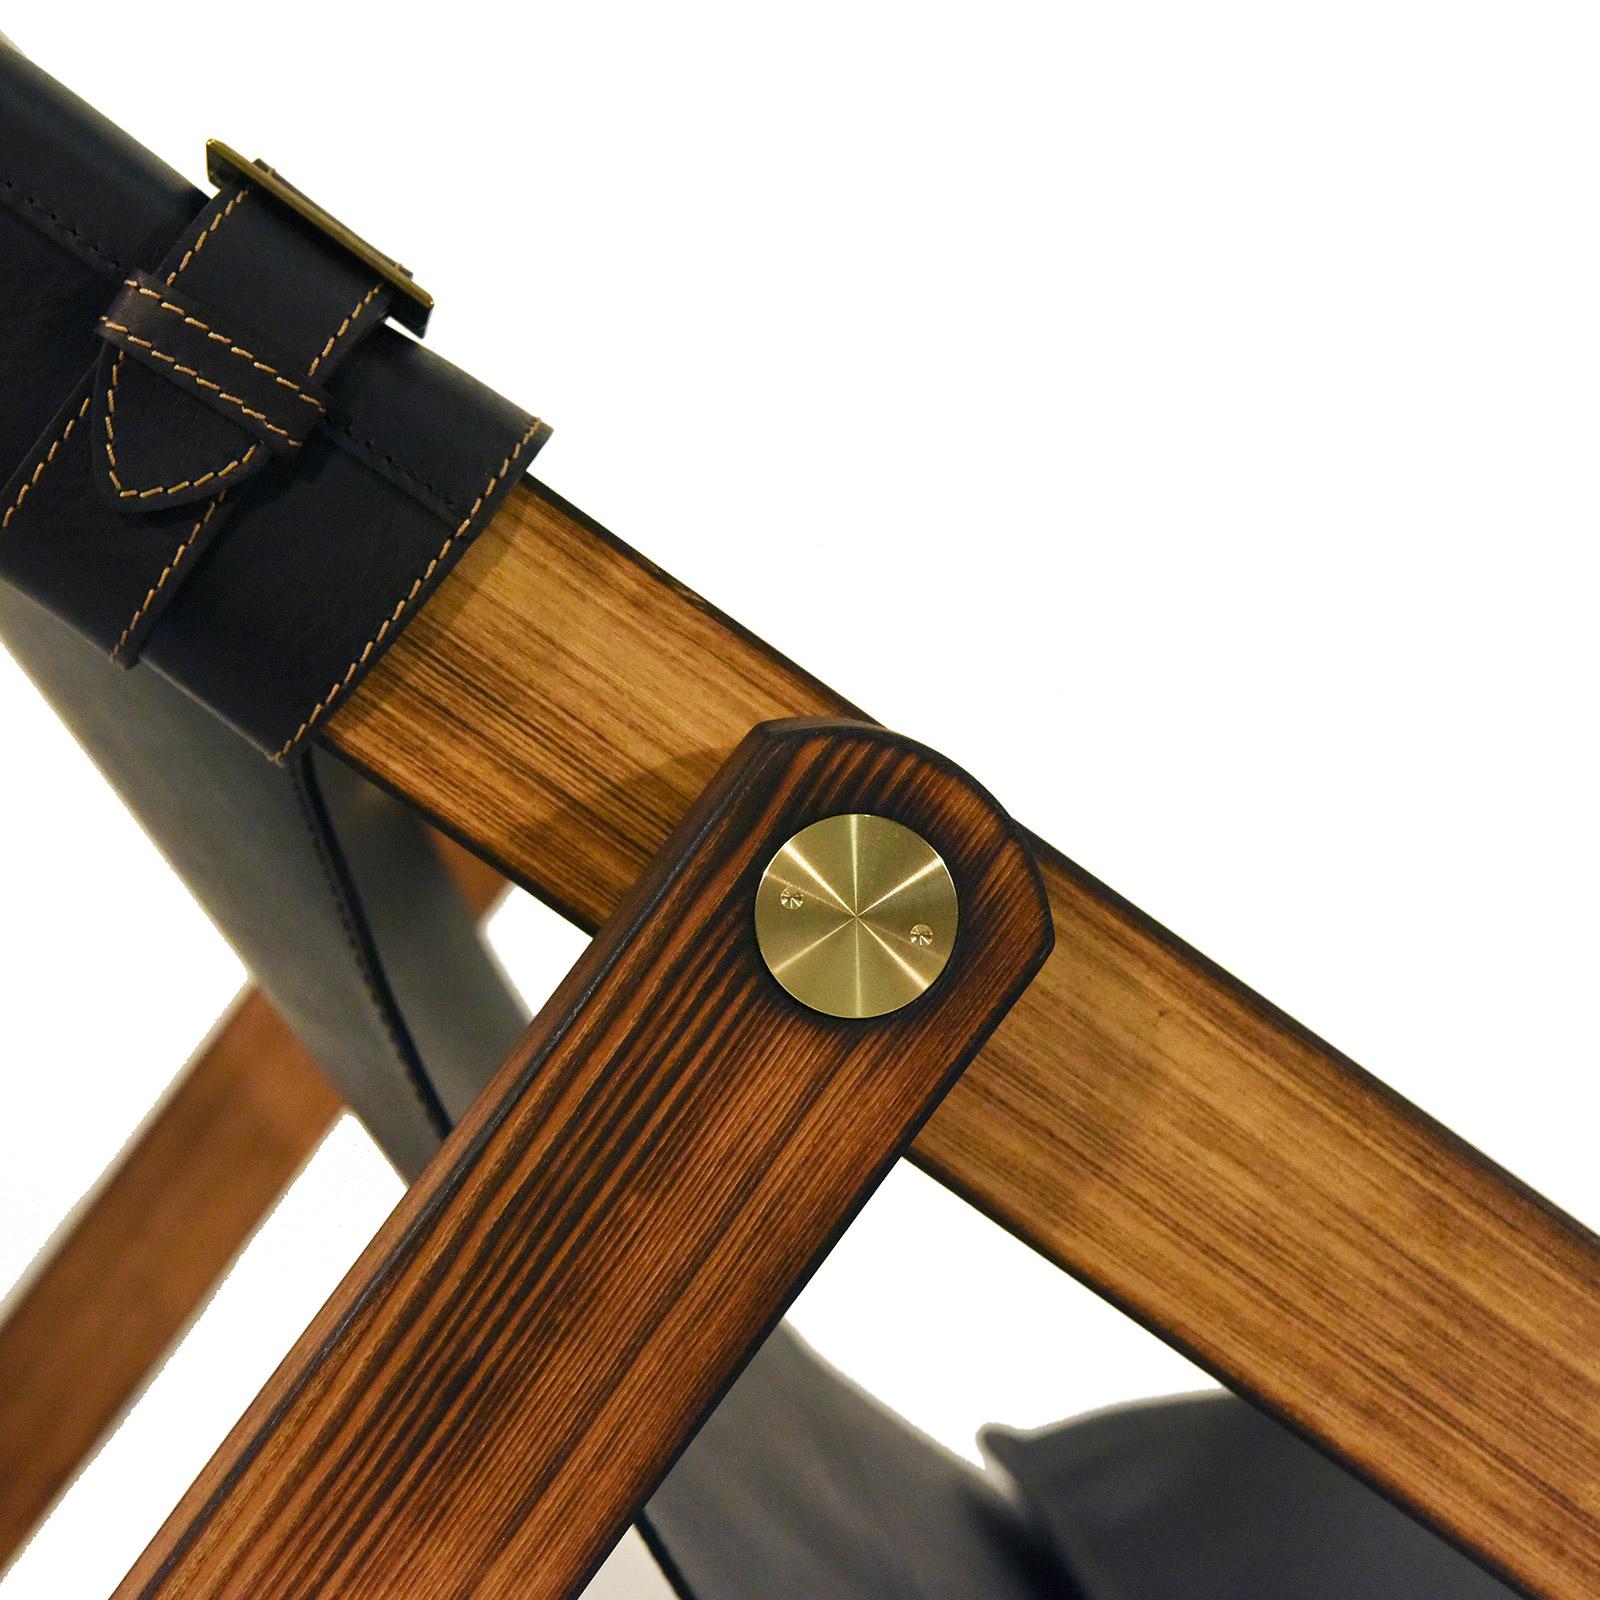 Leather Rossana Orlandi Sdraia Larch Chair by Matteo Casalegno